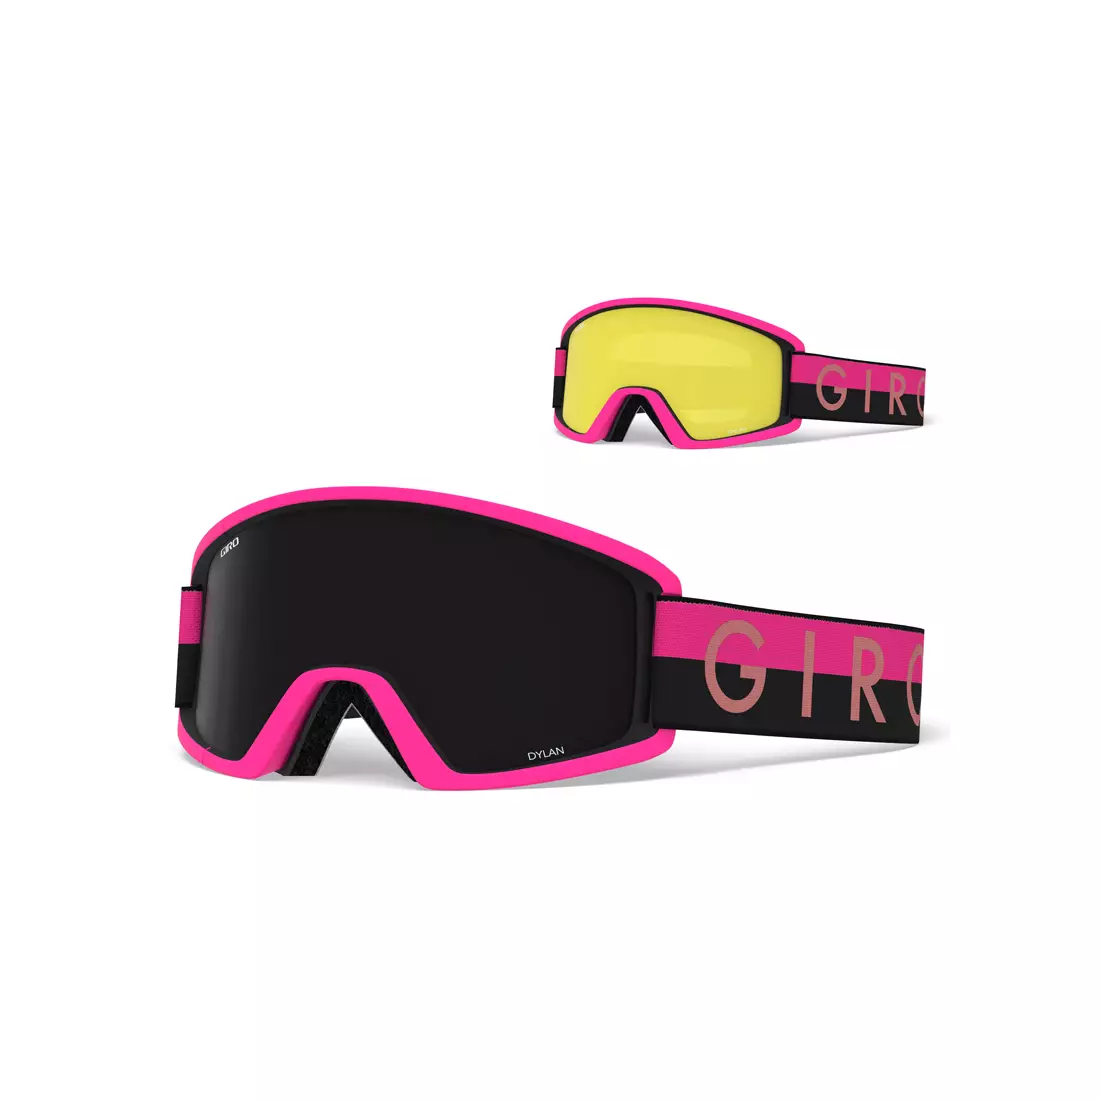 Ski / snowboard goggles GIRO DYLAN BLACK PINK THROWBACK GR-7094554